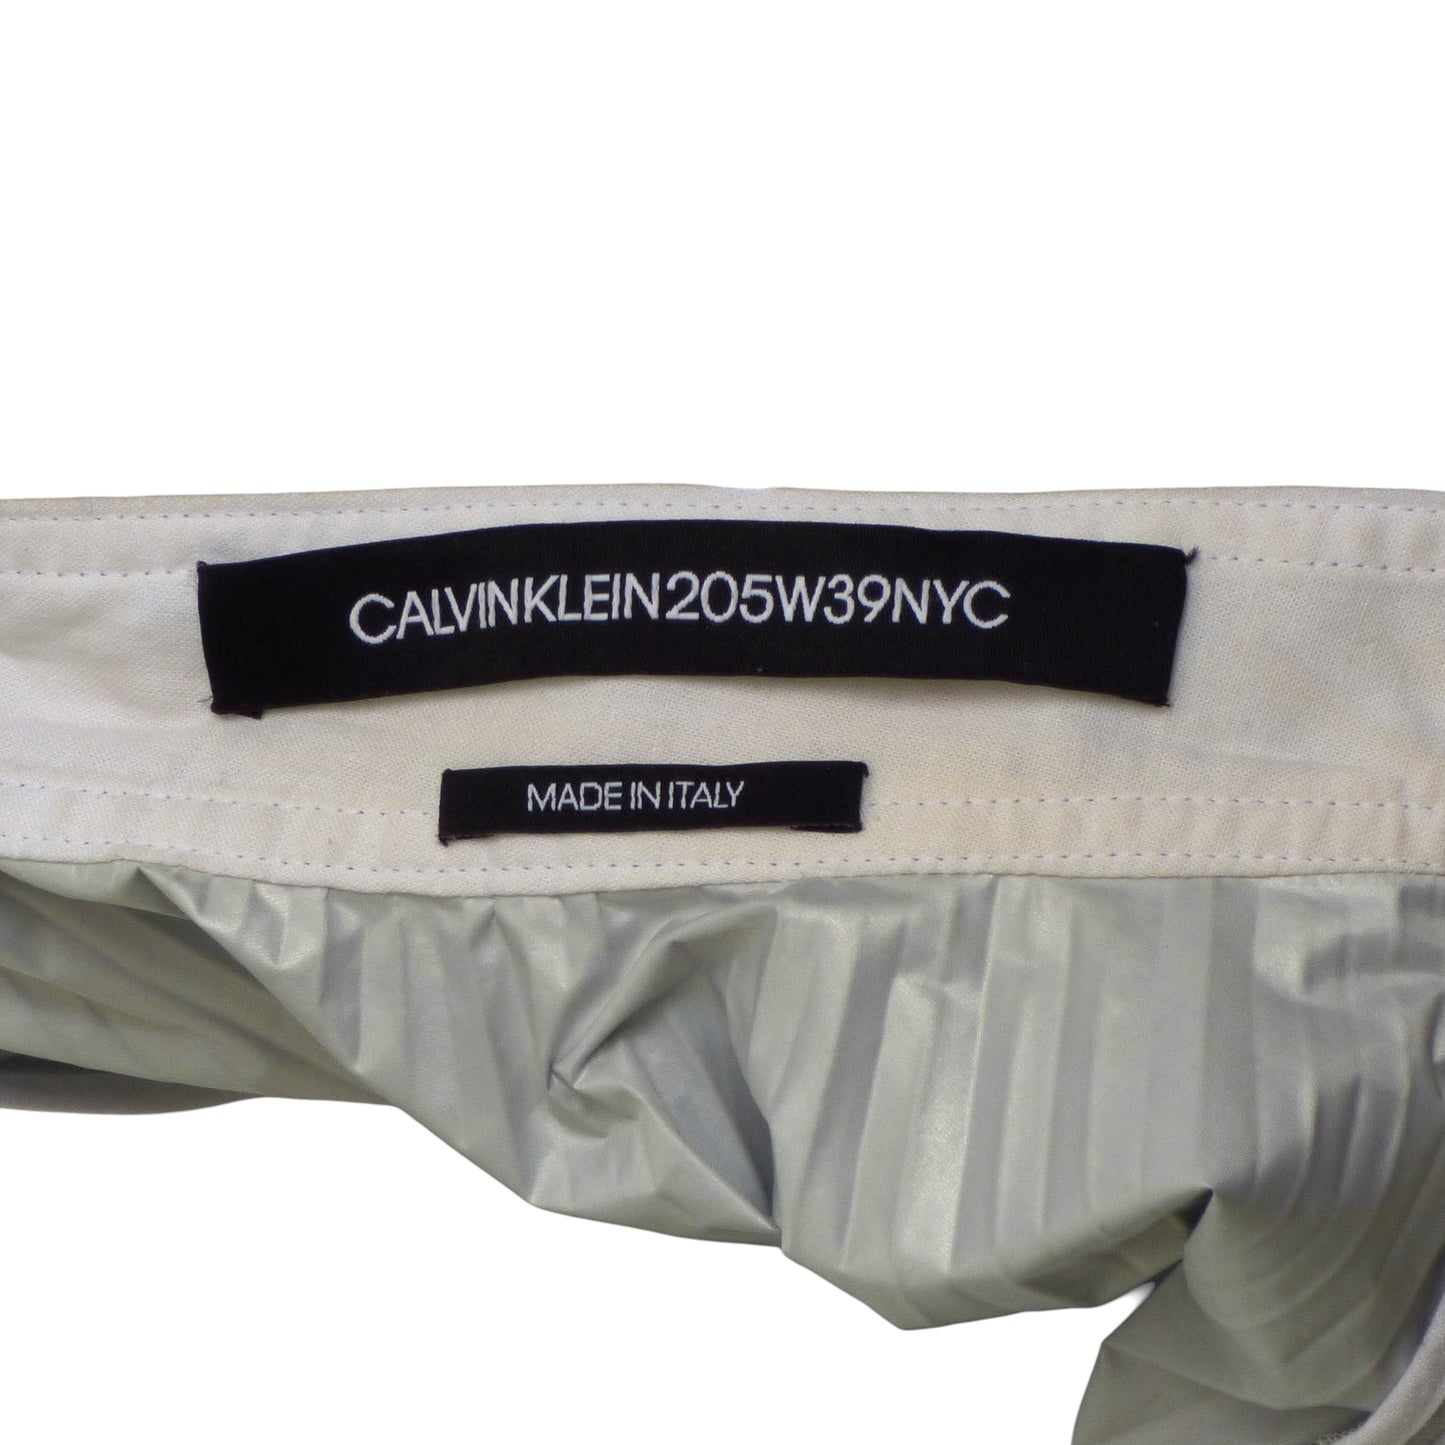 CALVINKLEIN305W39NYC-Silver Accordion Pleat Skirt, Size-8